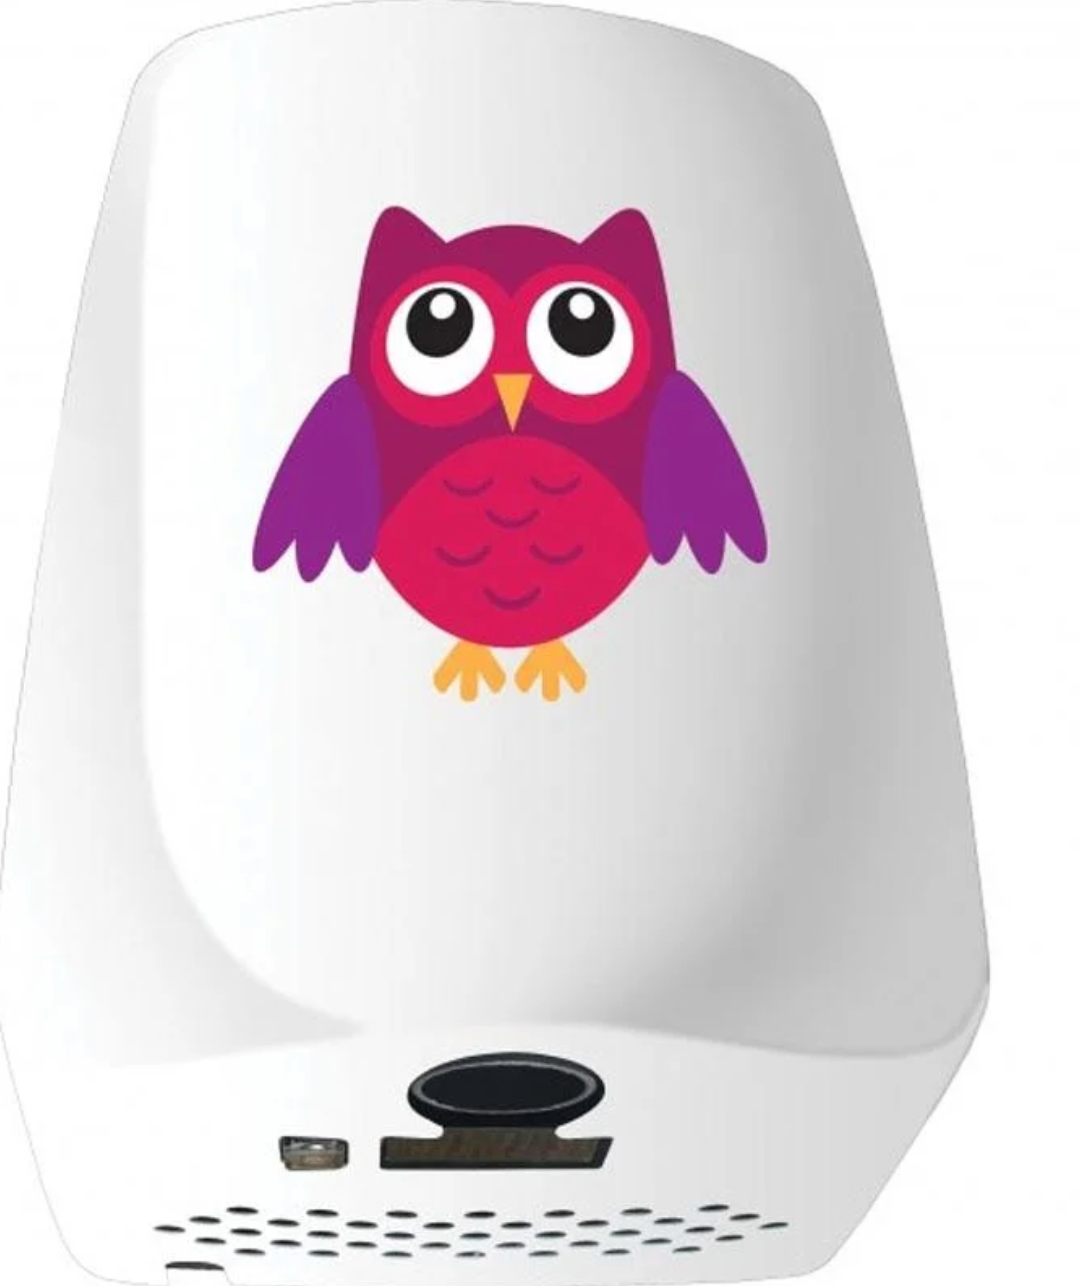 F5 Eco Owl 'Pink' - Children's Hand Dryer - VUK027OWLP - Veltia